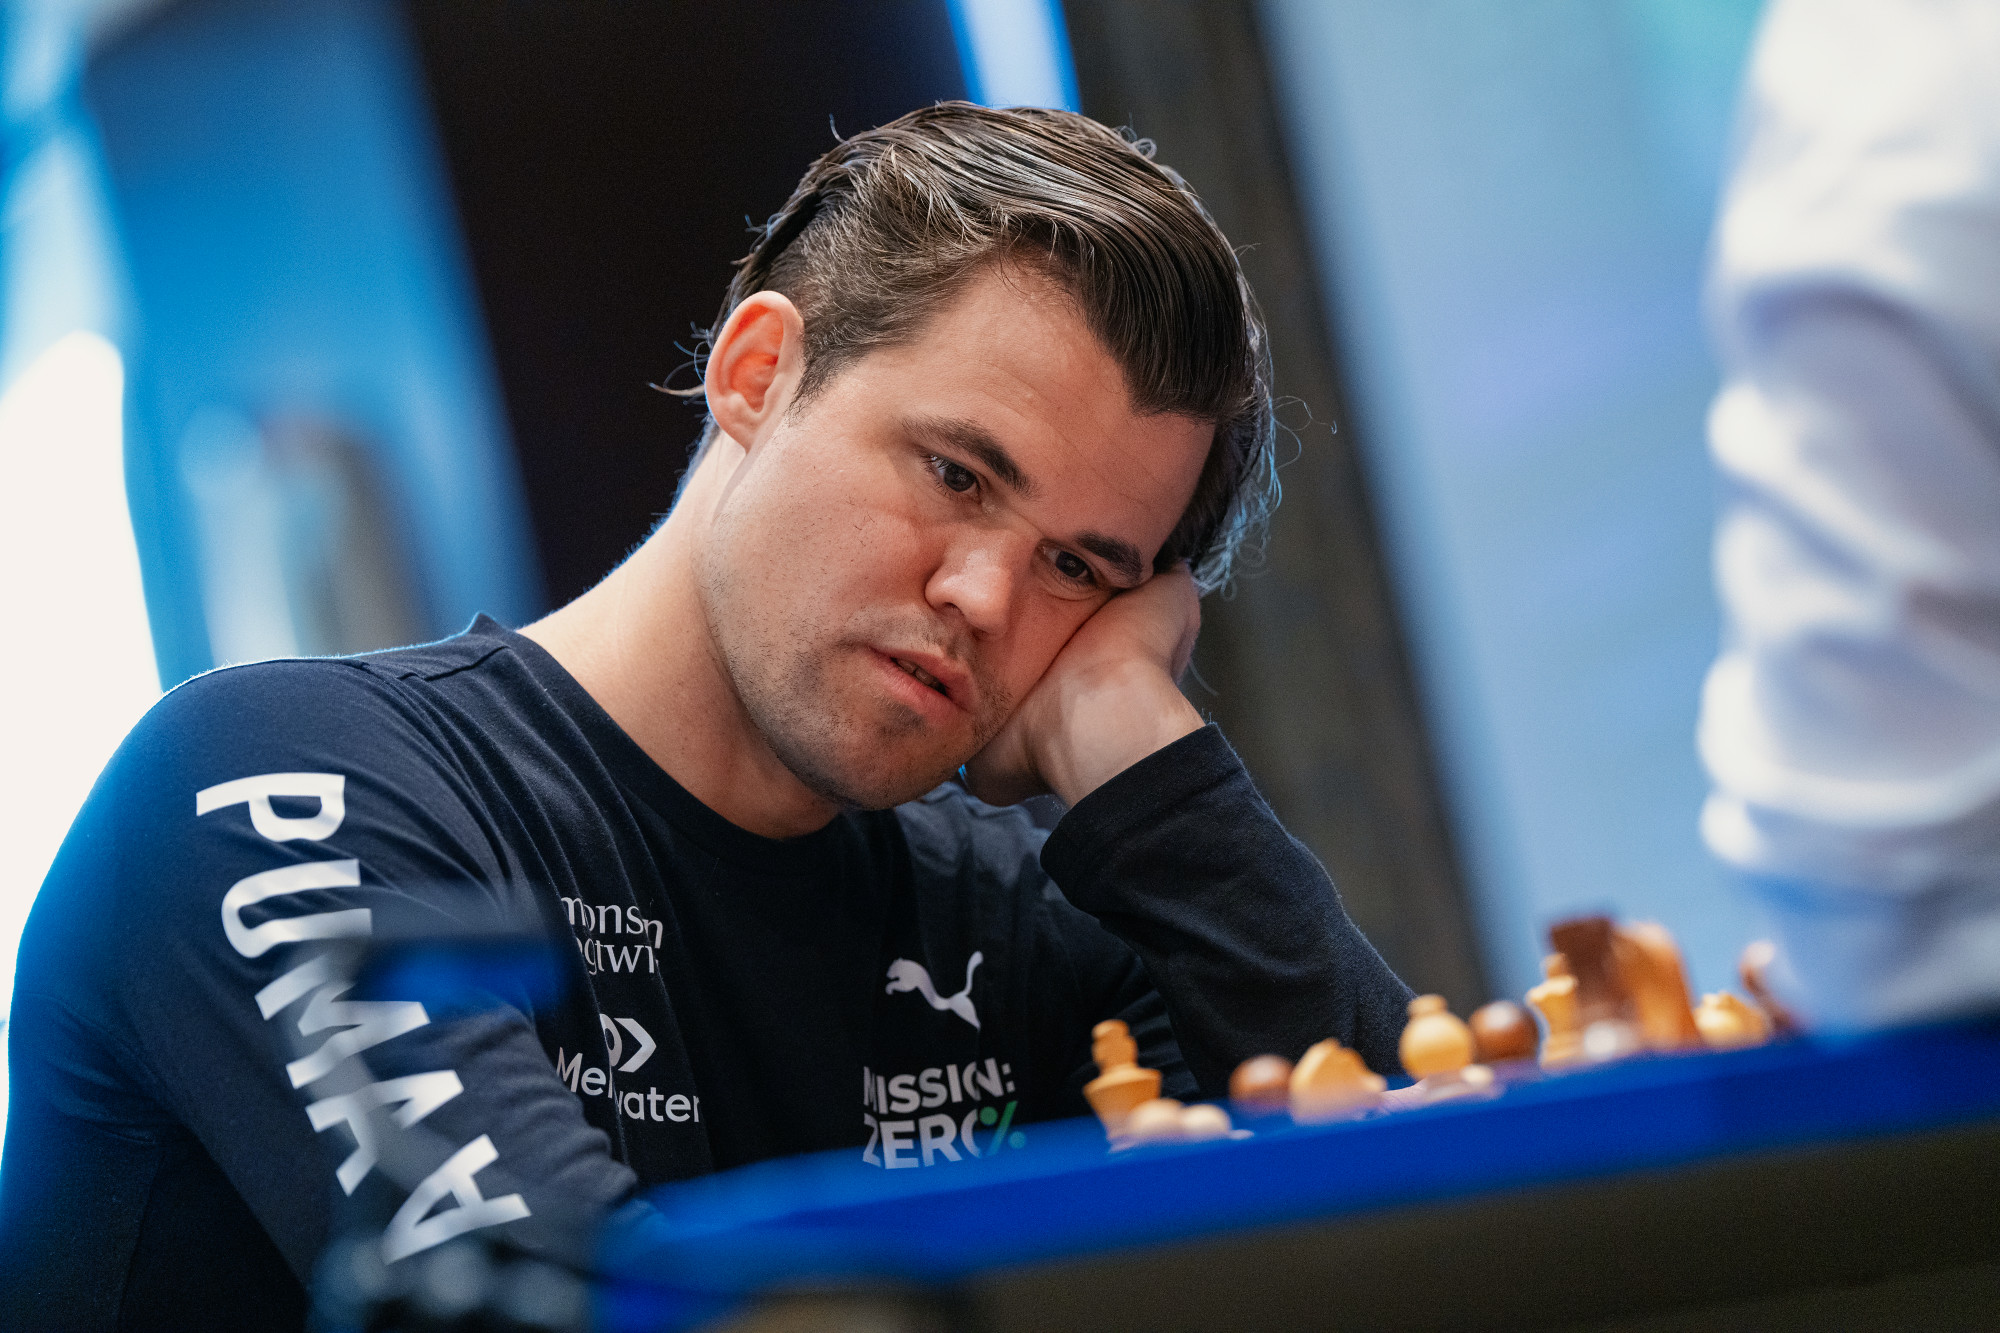 Vincent Keymer speaks about his win against Magnus Carlsen